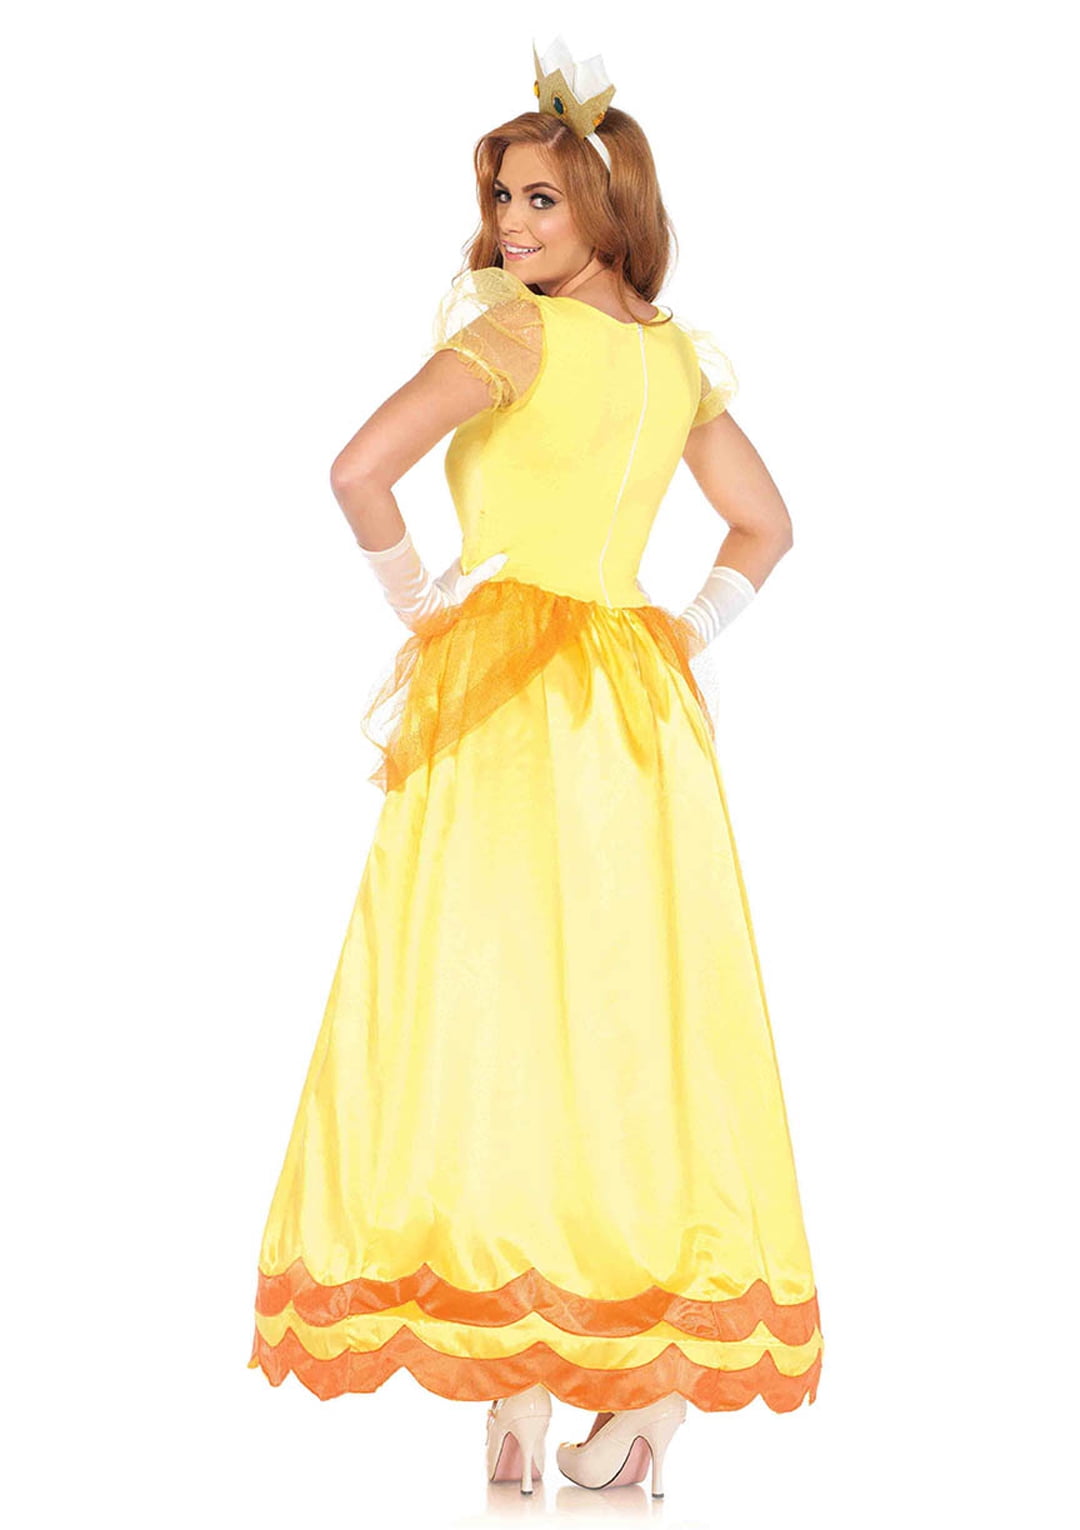 The best Disney Princess costumes for Halloween - ABC7 San Francisco